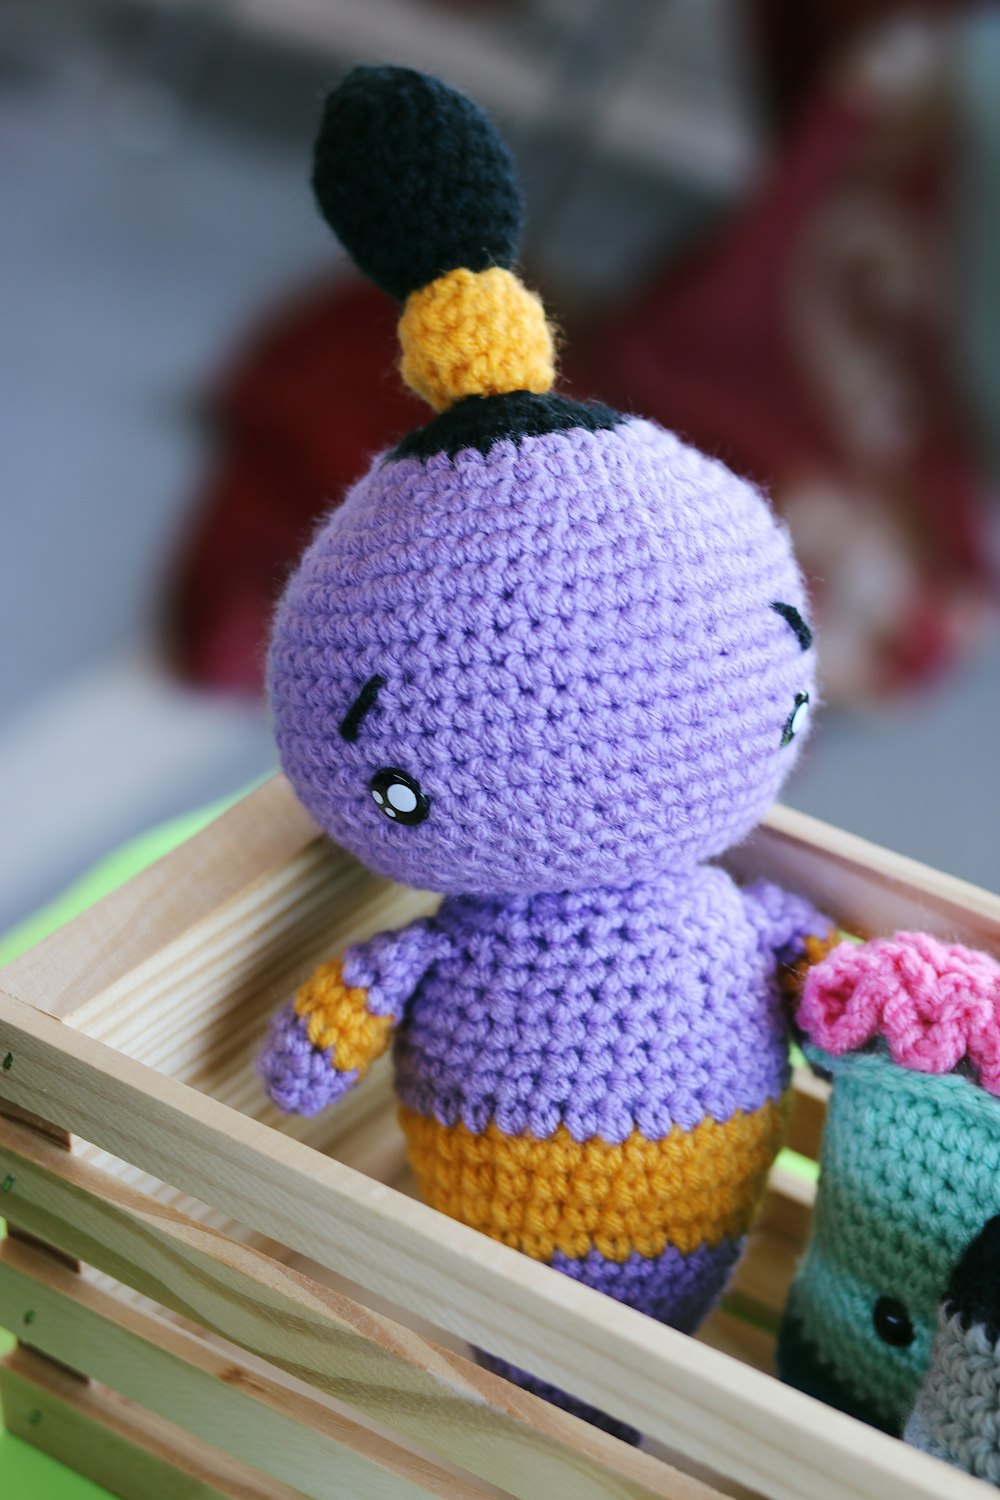 a purple stuffed animal